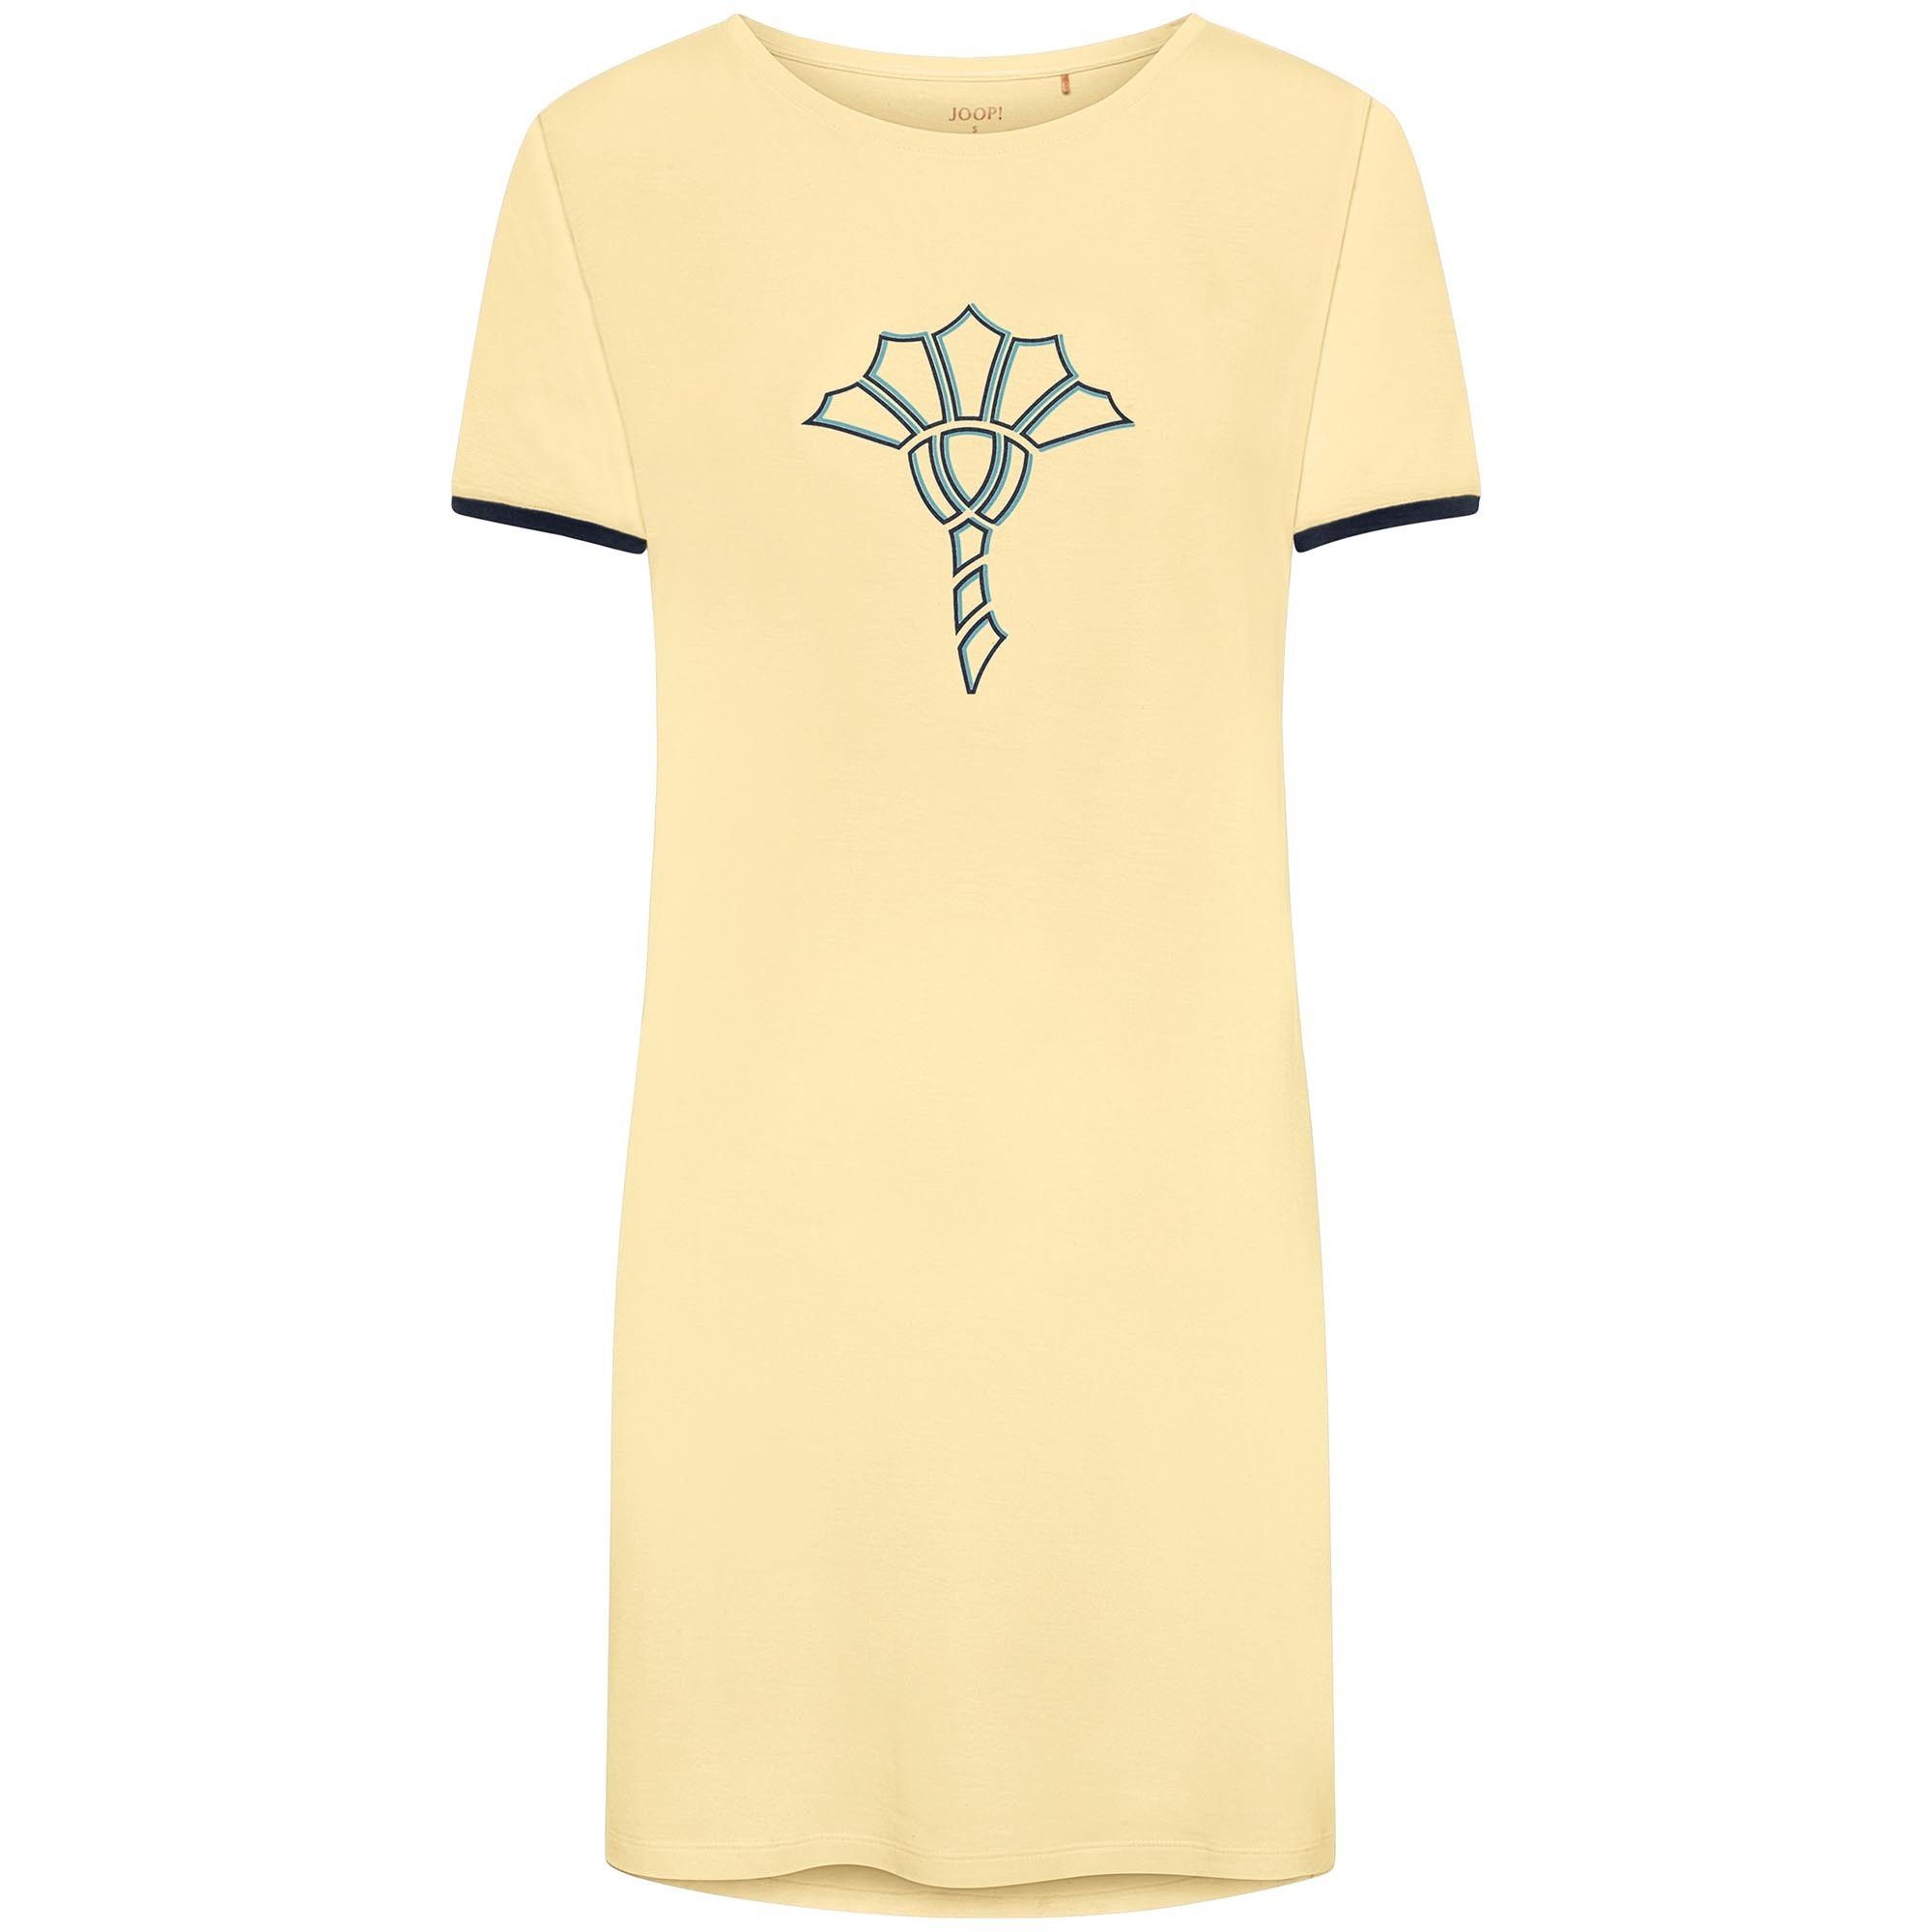 Joop! Nachthemd Damen Nachthemd - Sleepshirt, Bigshirt, Kurzarm,  Hautsympathischer, atmungsaktiver Tragekomfort